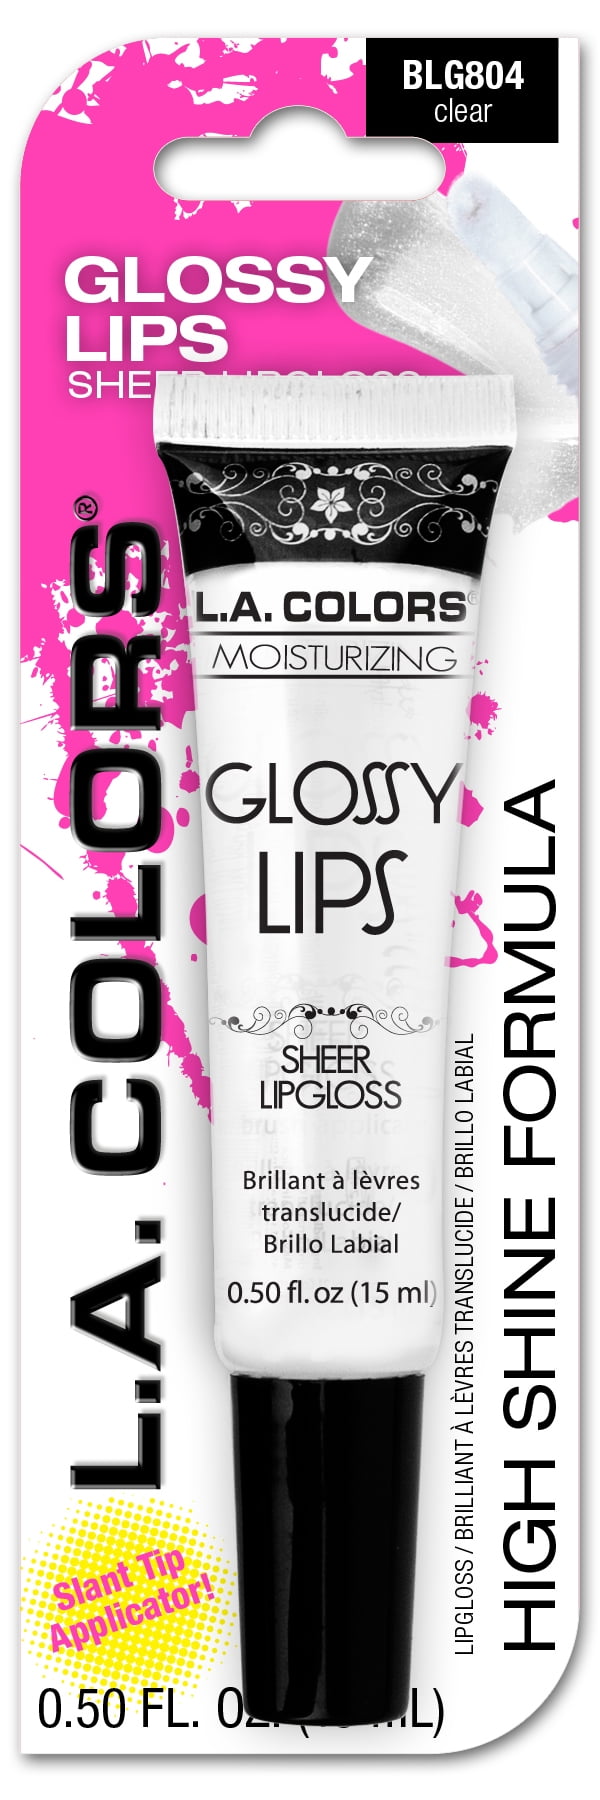 L.A. COLORS Sheer Tube Glossy Lips, Clear, 0.50 fl oz - Walmart.com